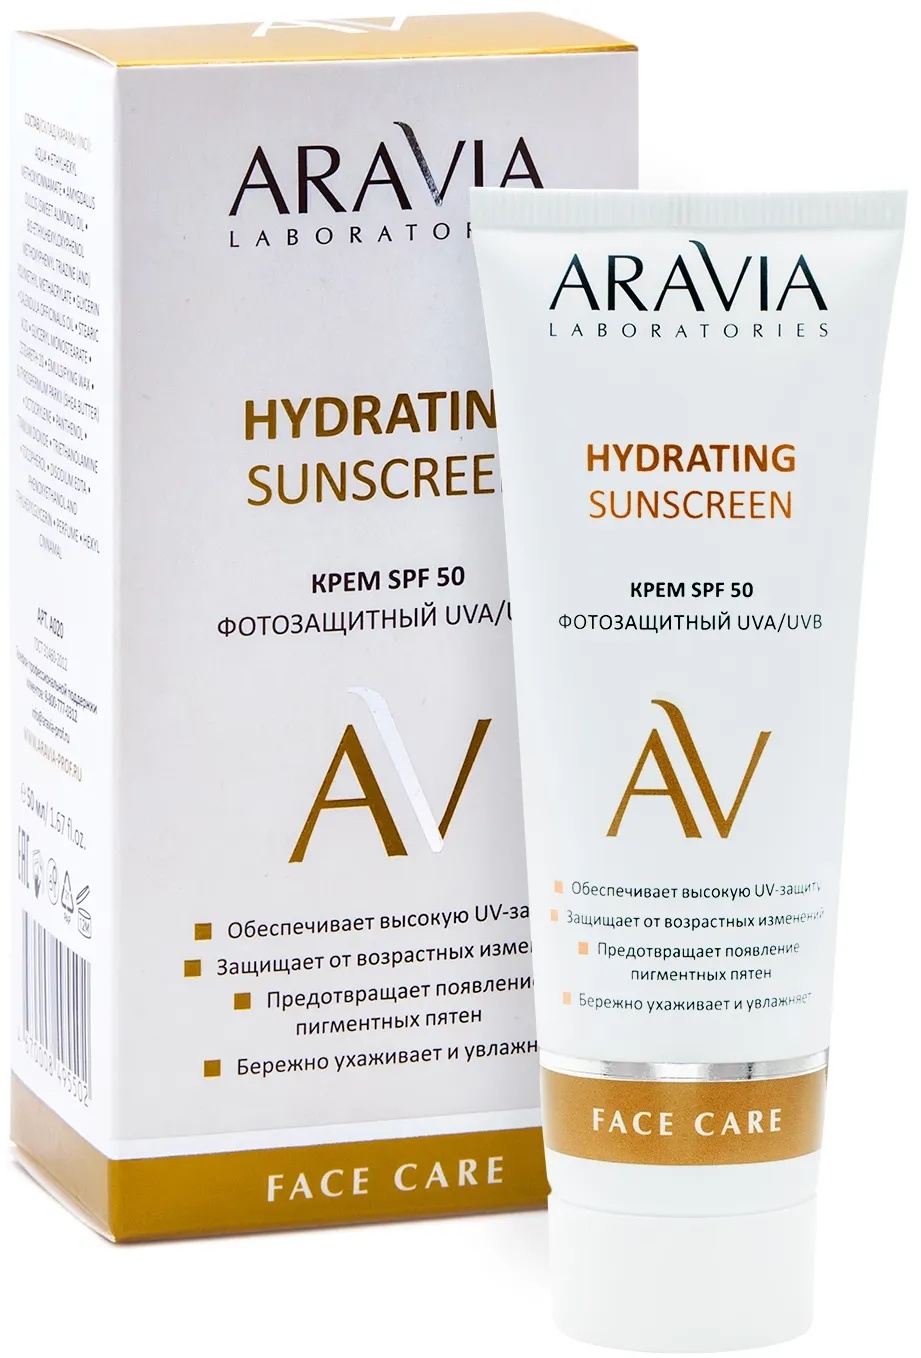 ARAVIA Professional SPF 50 Hydrating Sunscreen